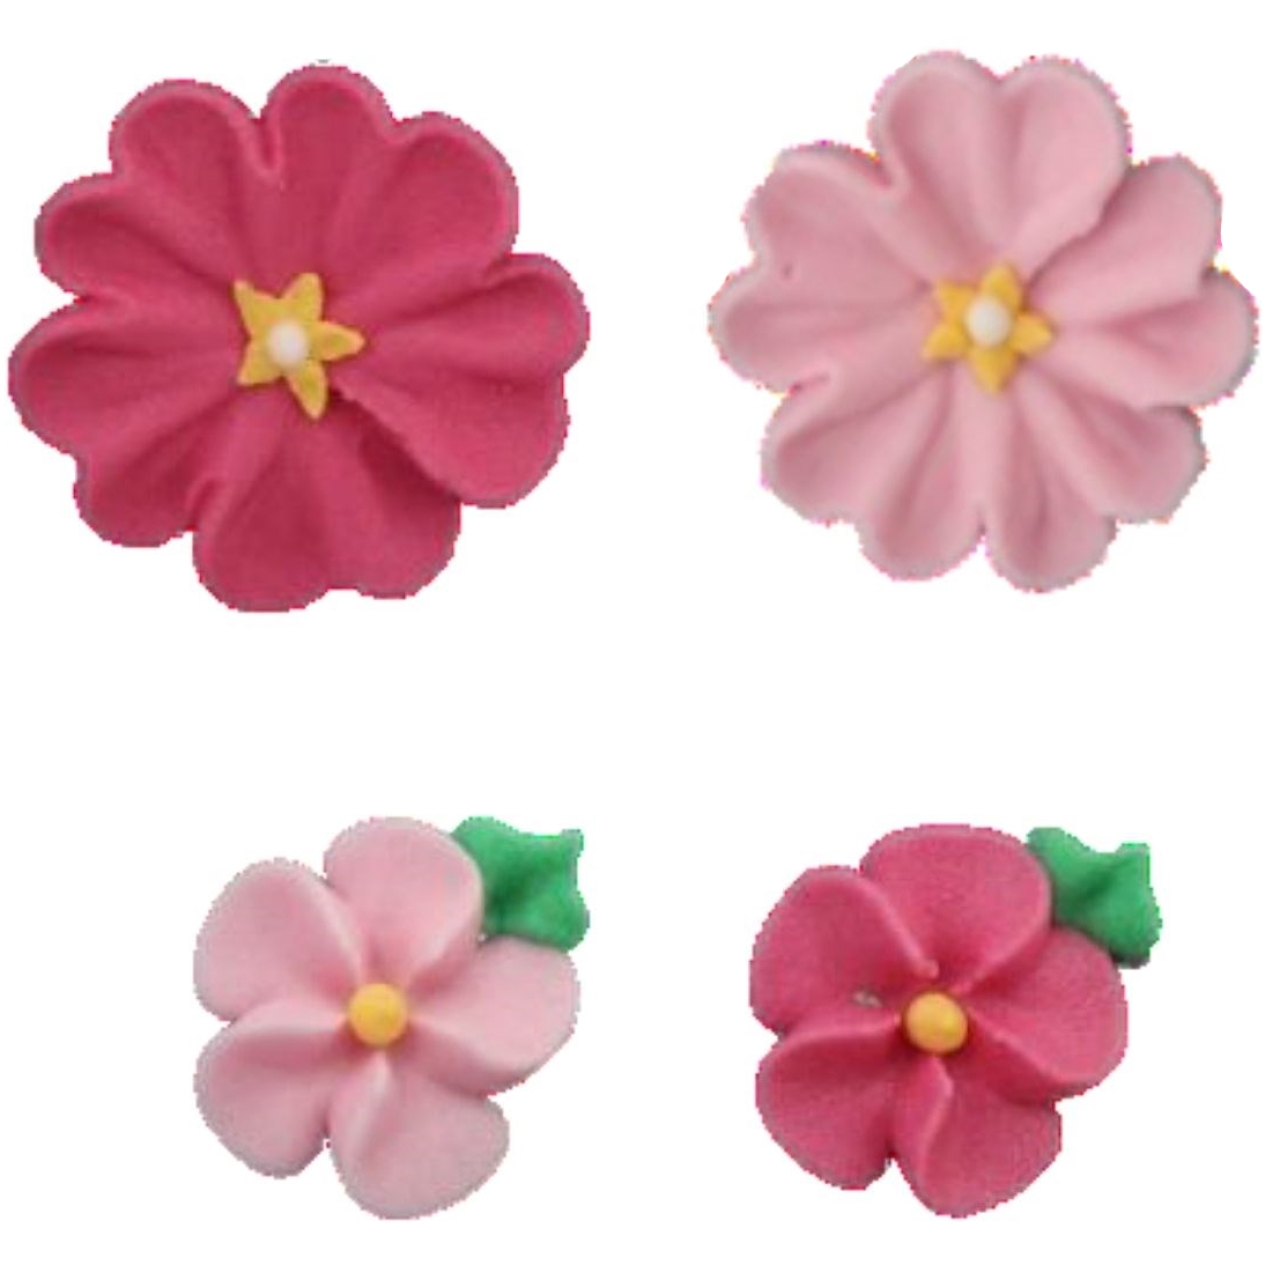 Zuckerblumen "Anemonen & Daisy", 14 Stück (4 Designs), Lila/Violett, 1,5-2,5 cm, Culpitt